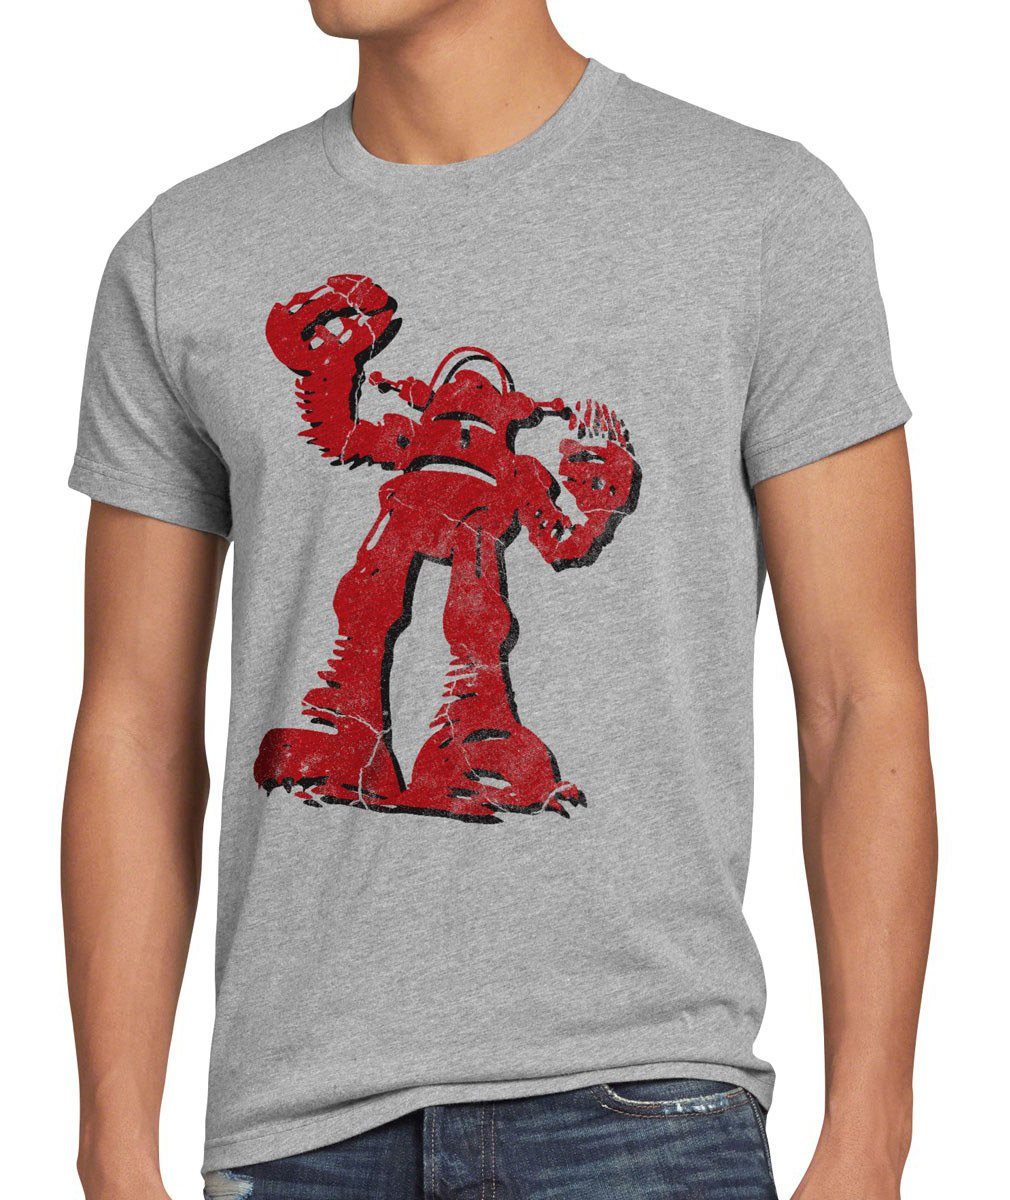 style3 Print-Shirt Herren T-Shirt Hero Robot Big Bang Sheldon TV Serie Roboter Cooper Comic Theory grau meliert